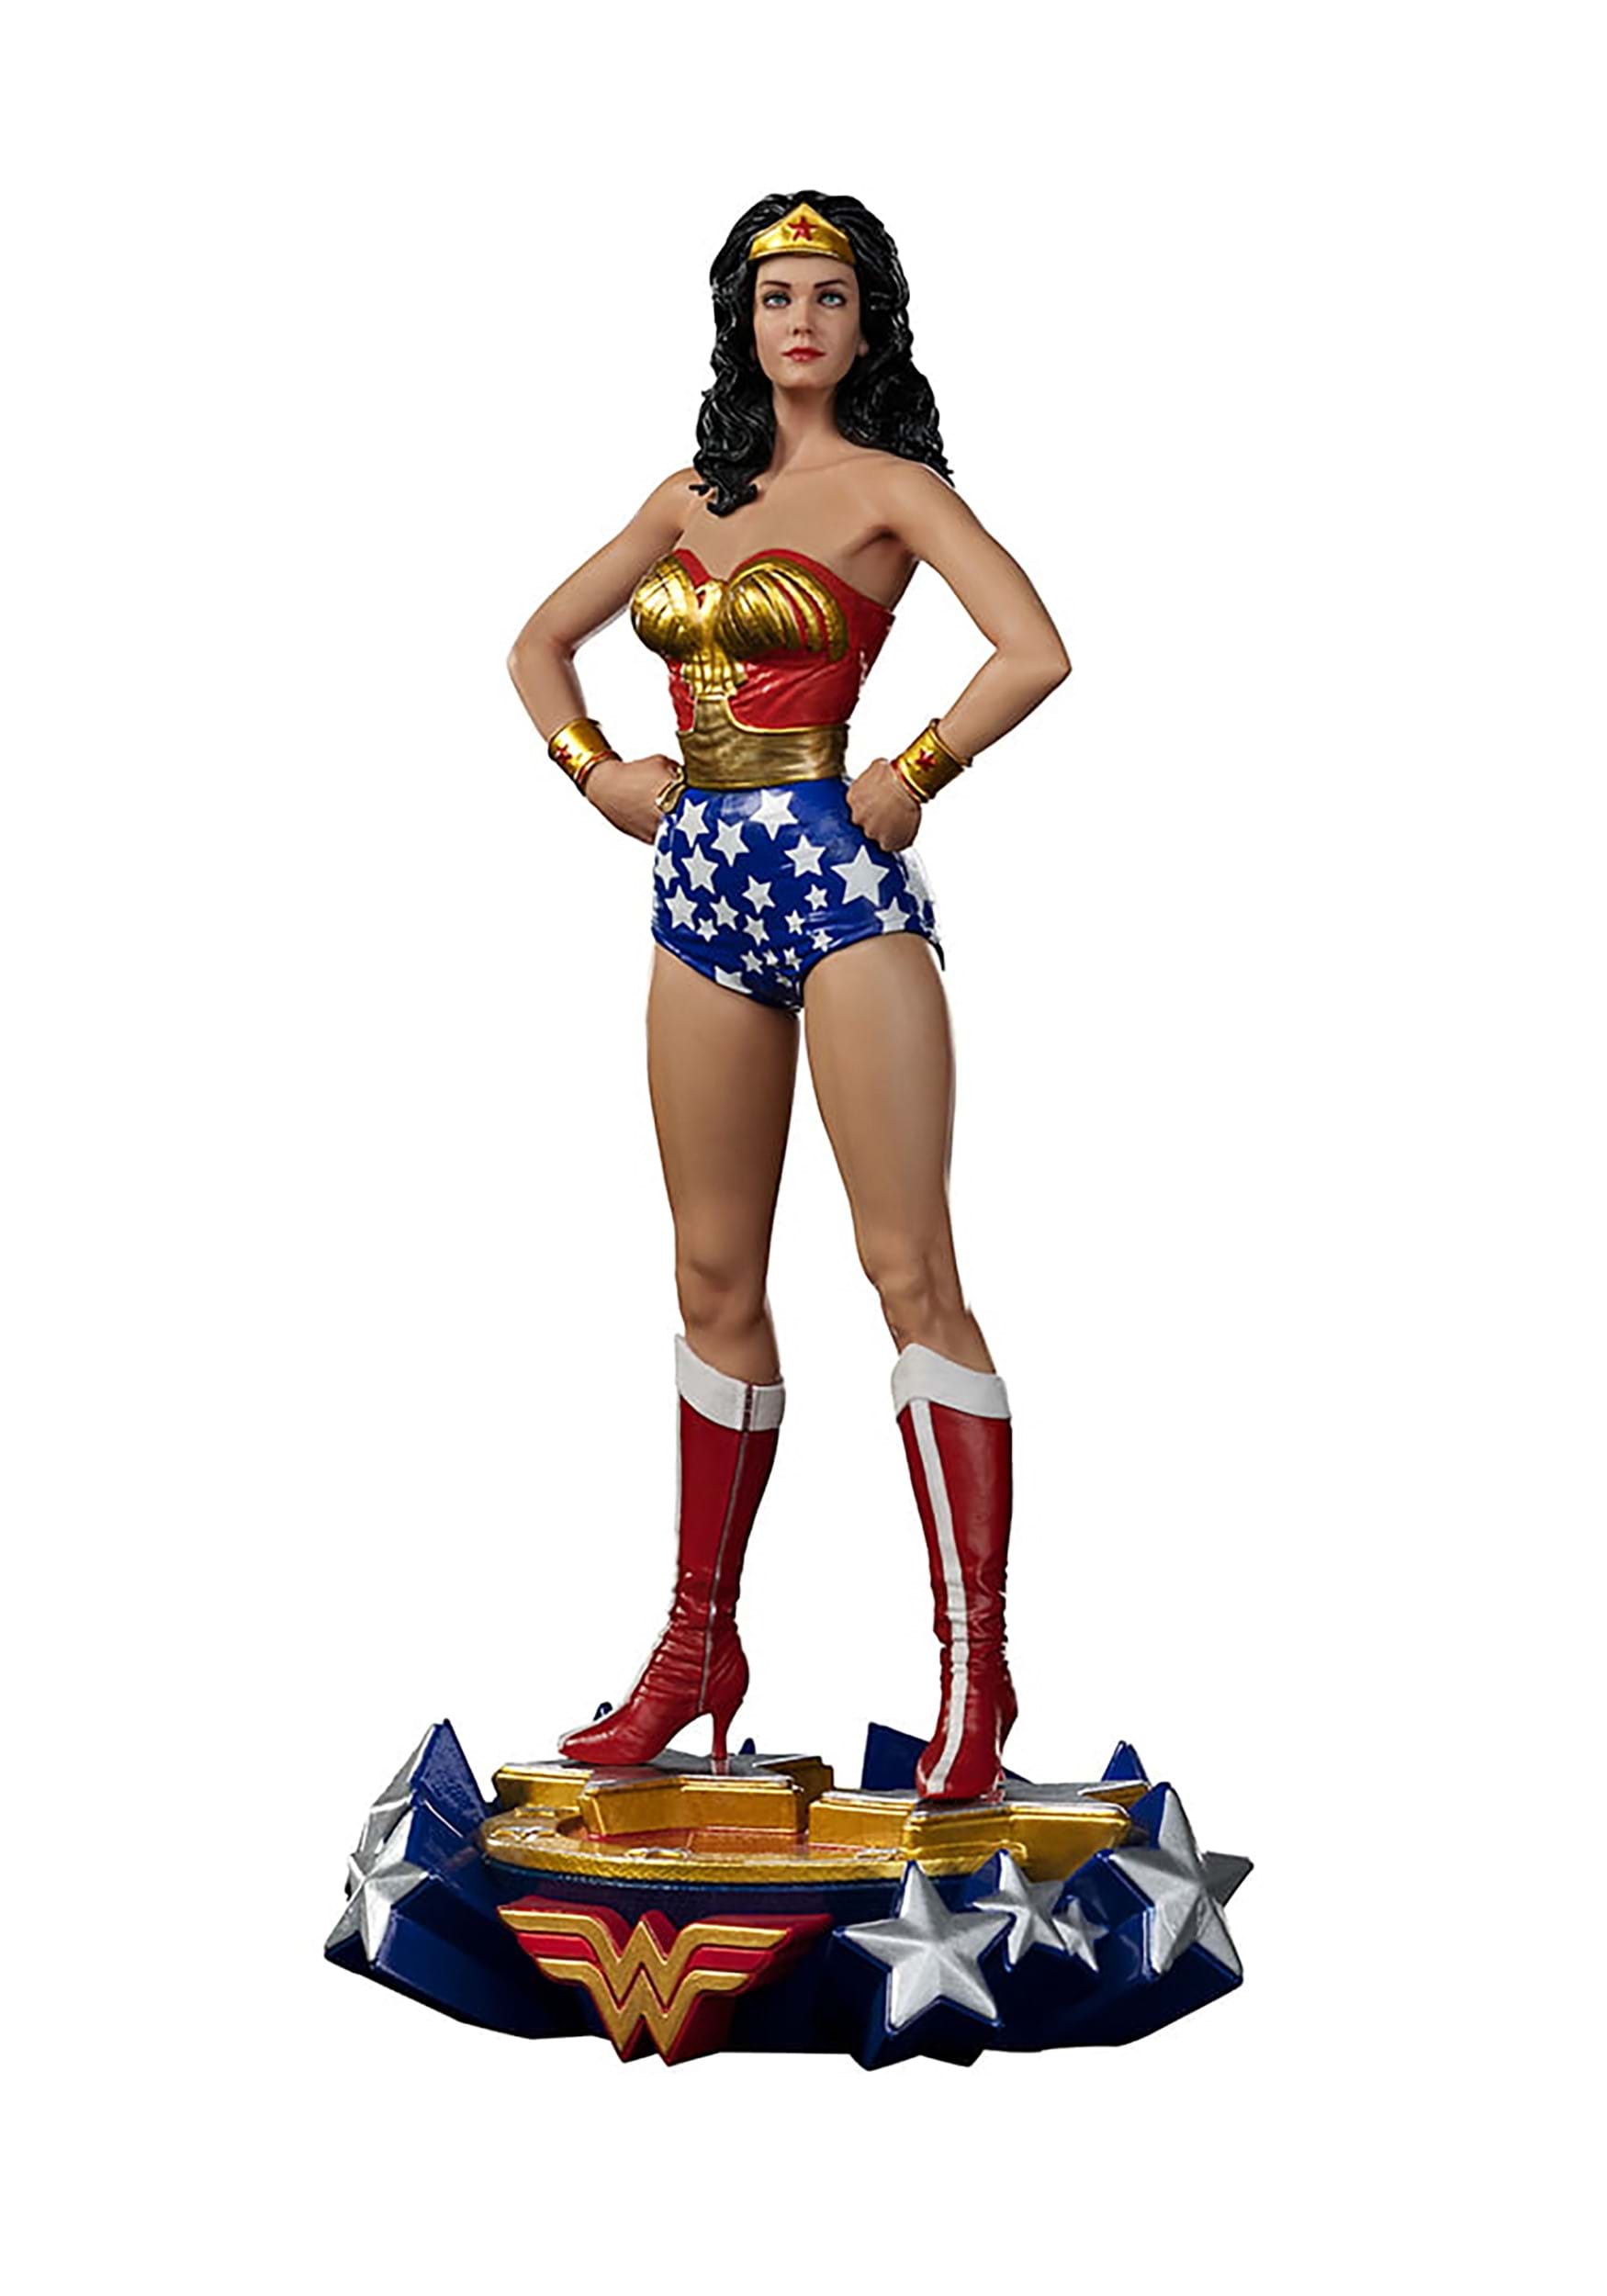 Power Posing: Does Wonder Woman Work?